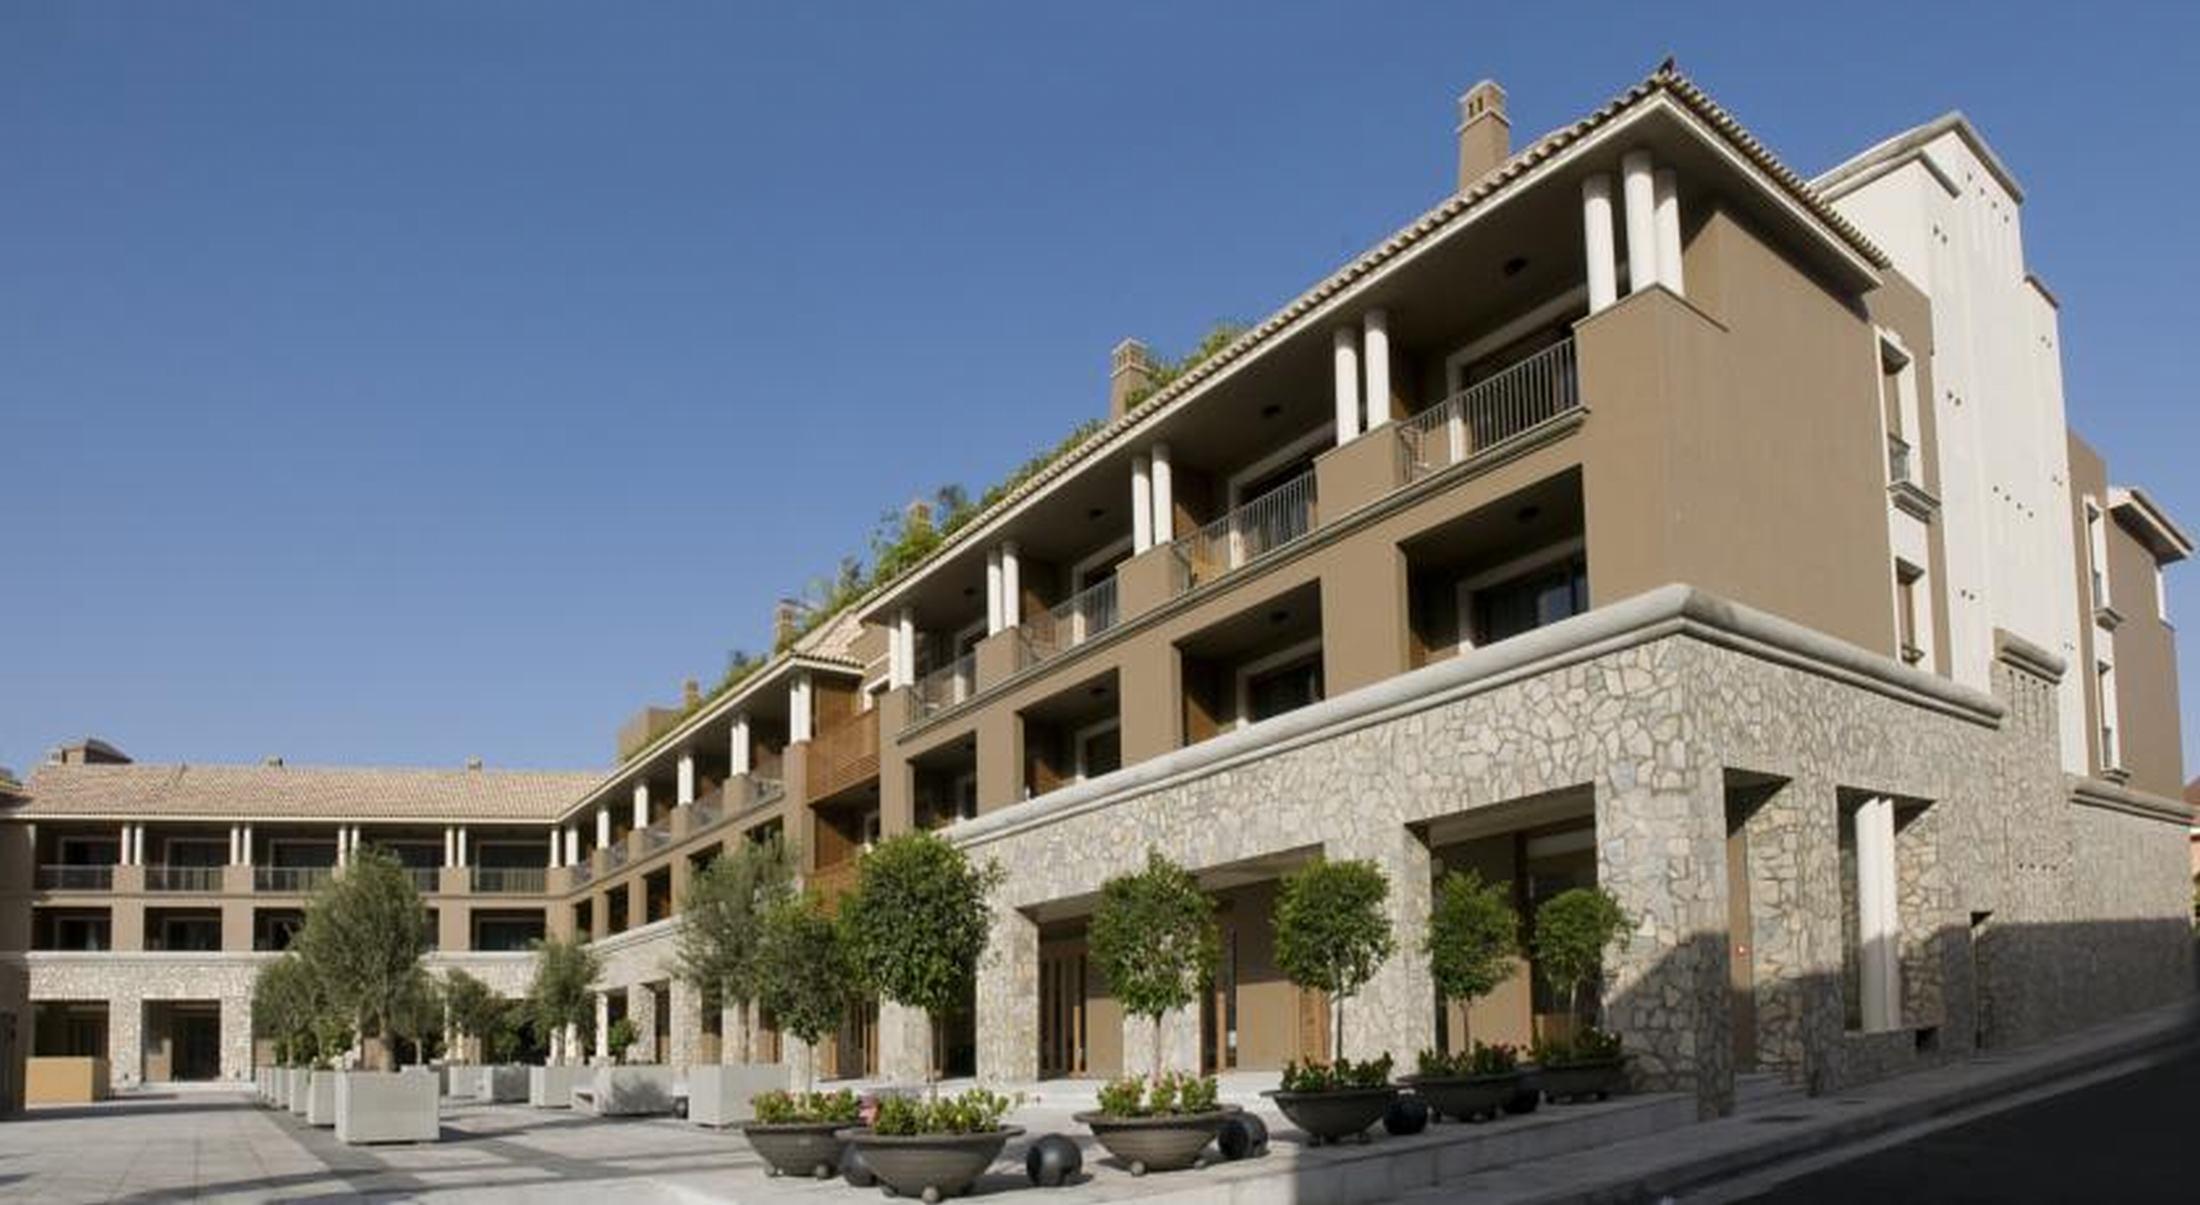 Hotel Playa Calera Valle Gran Rey Exterior photo